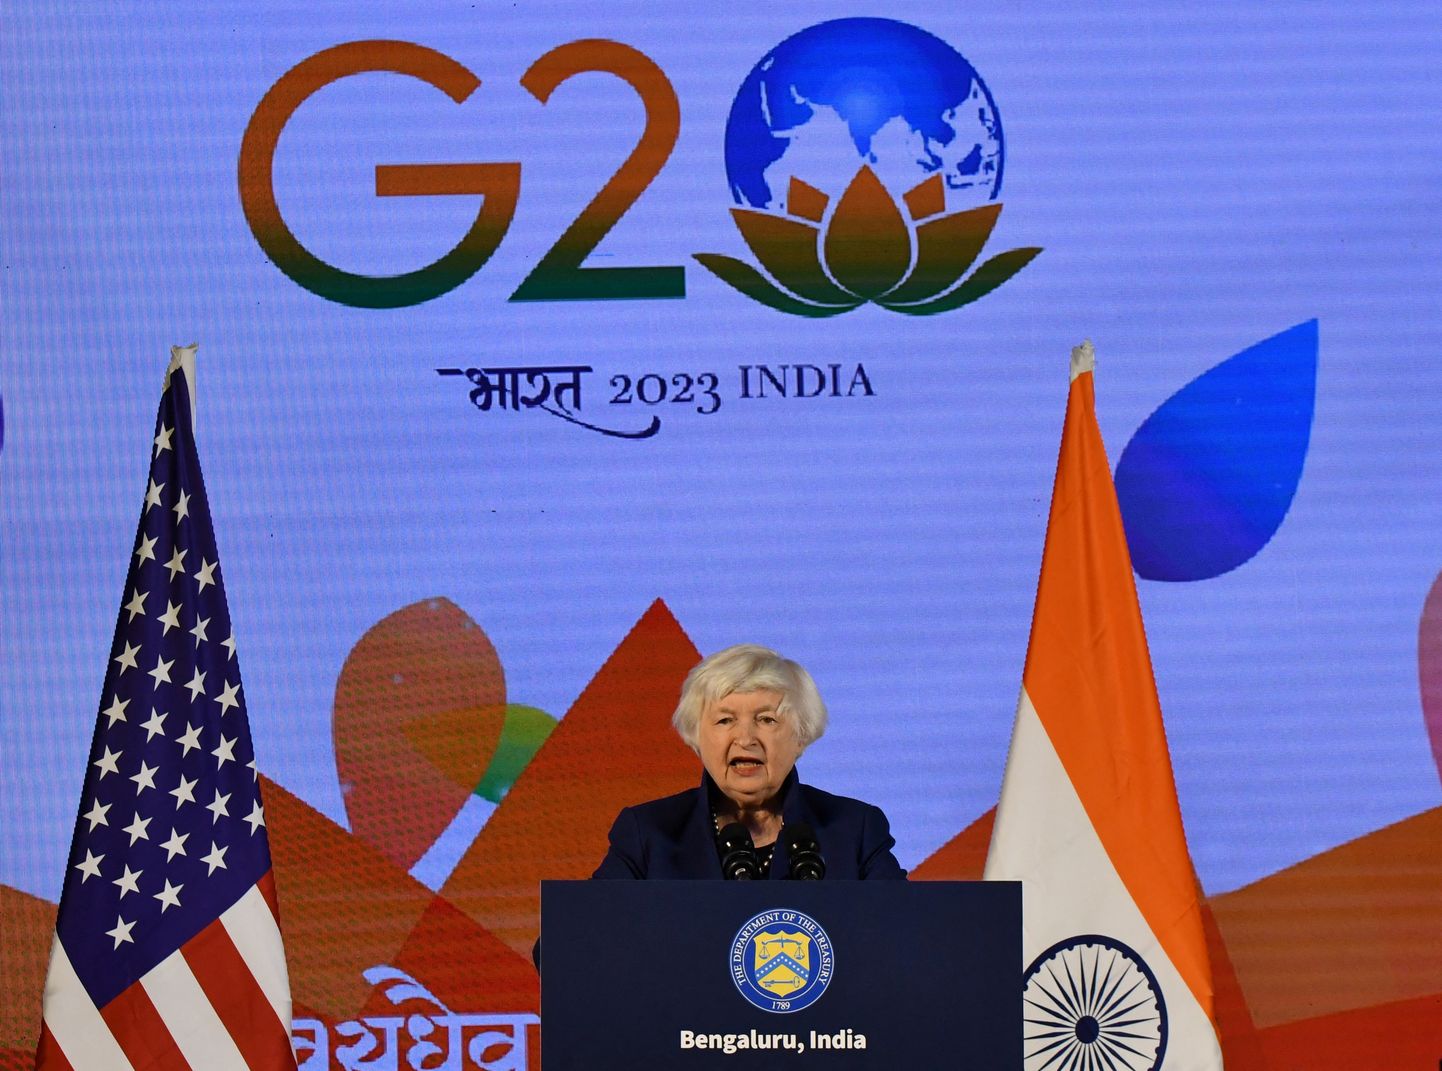 Usa rahandusminister Janet Yellen enne G20 rahandusministrite kohtumist kõnet pidamas.  23.02.2023